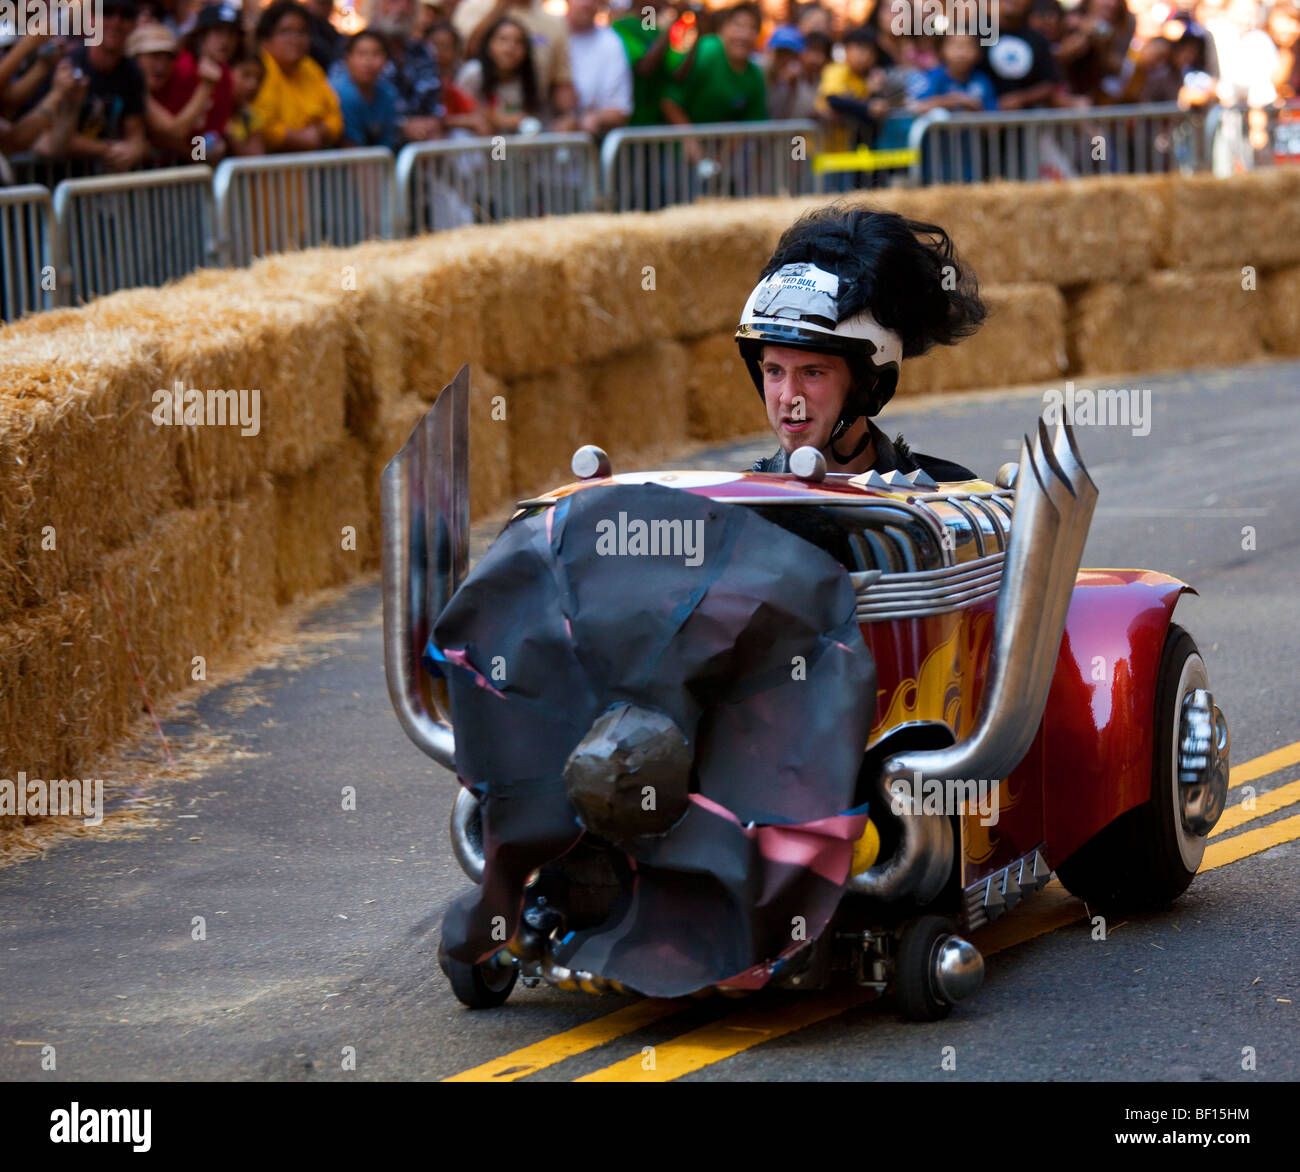 Redbull "Red bull" go-kart soapbox "soap box" kart race la Los Angeles  Stock Photo - Alamy